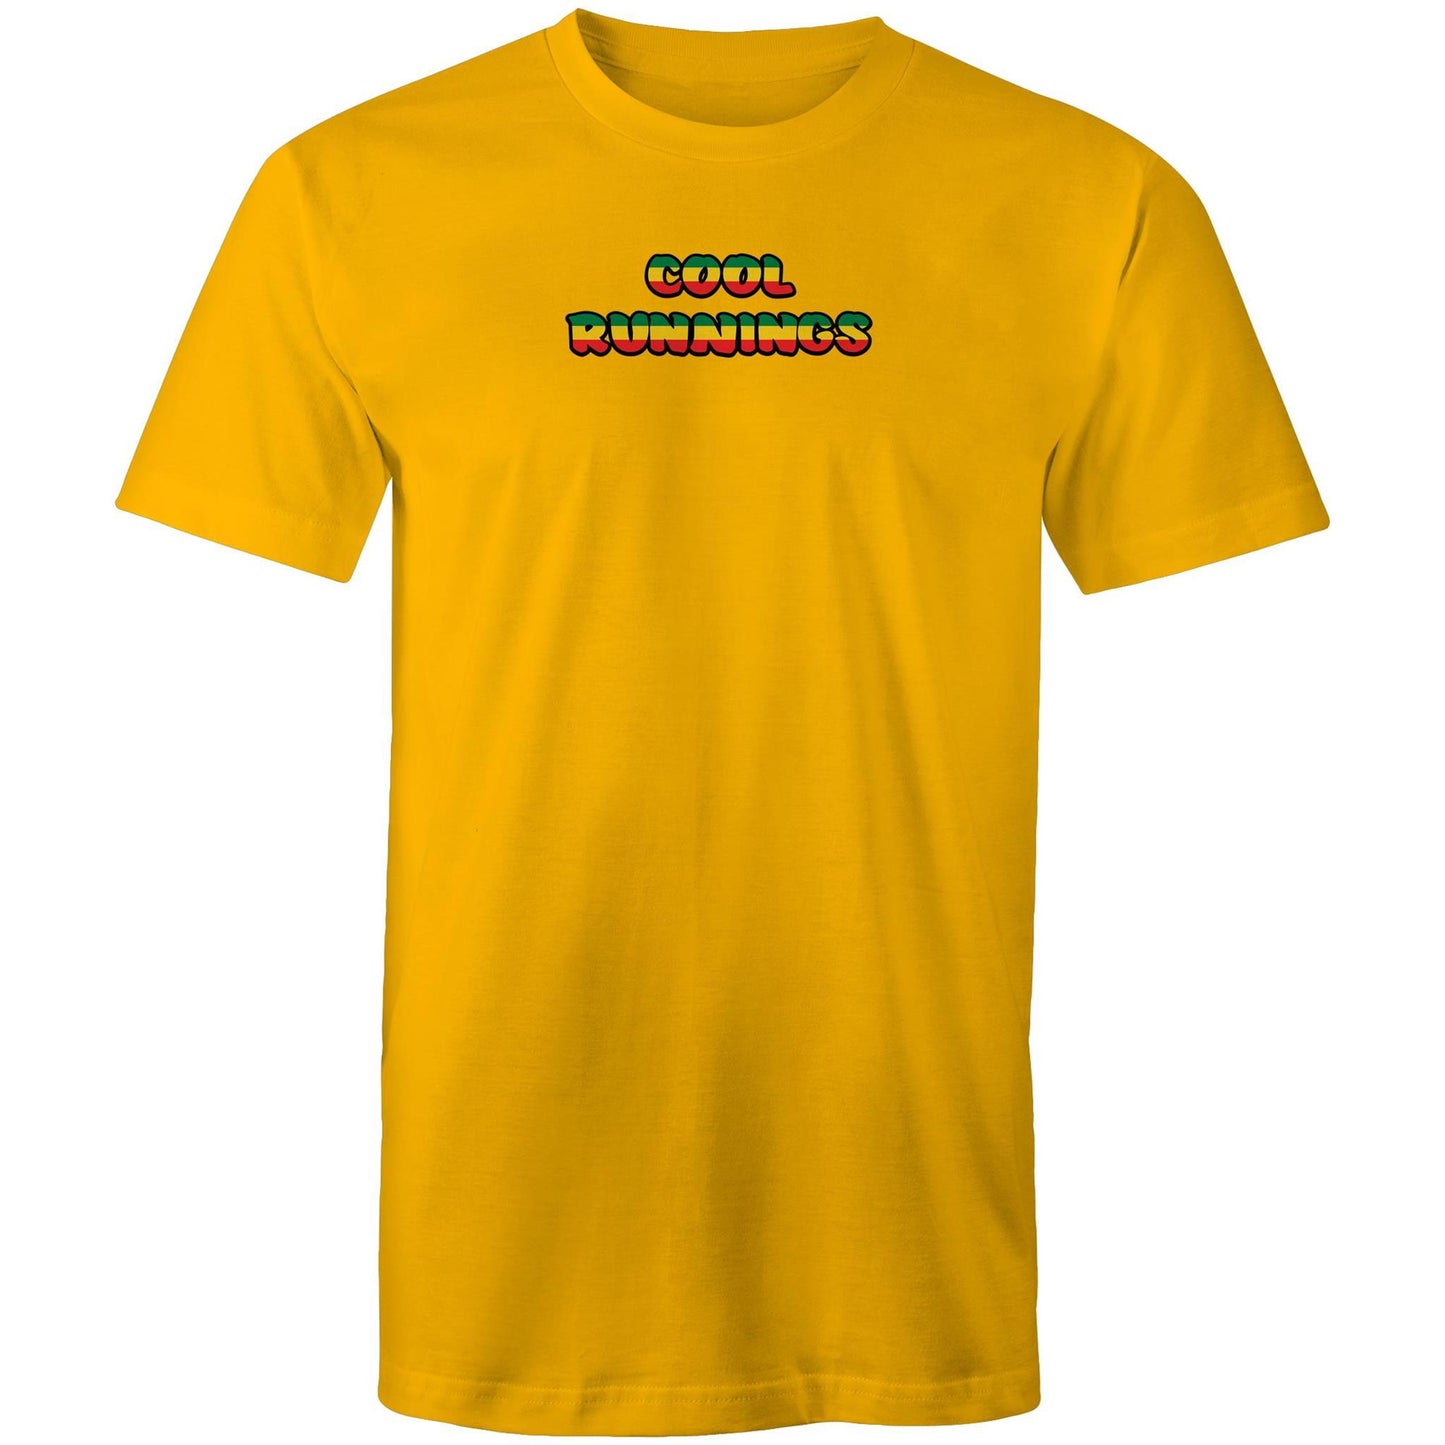 Cool Runnings T Shirts for Men (Unisex)